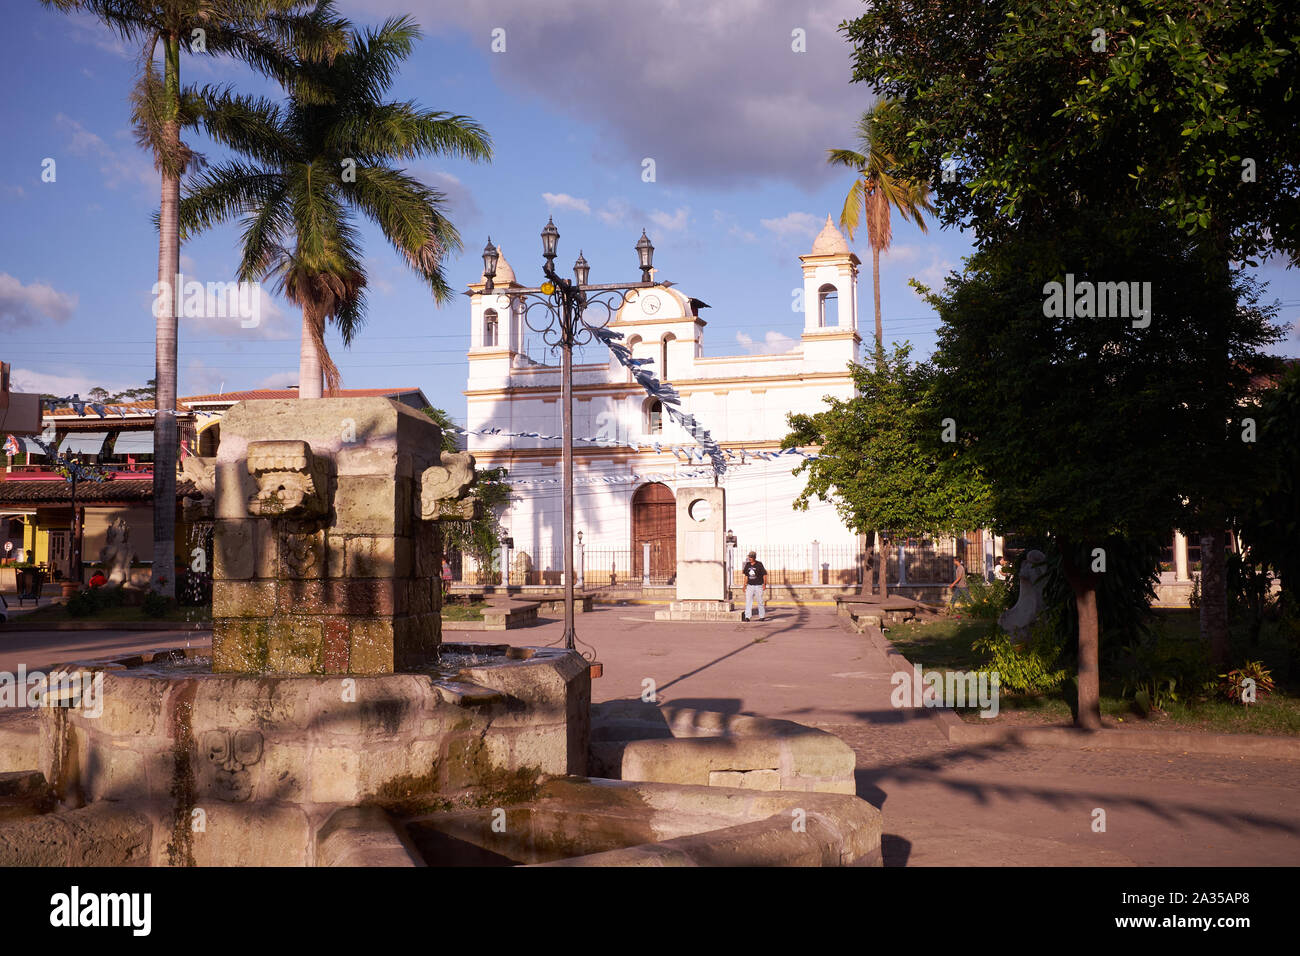 The church in the town of Copan Ruinas in Honduras Stock Photo